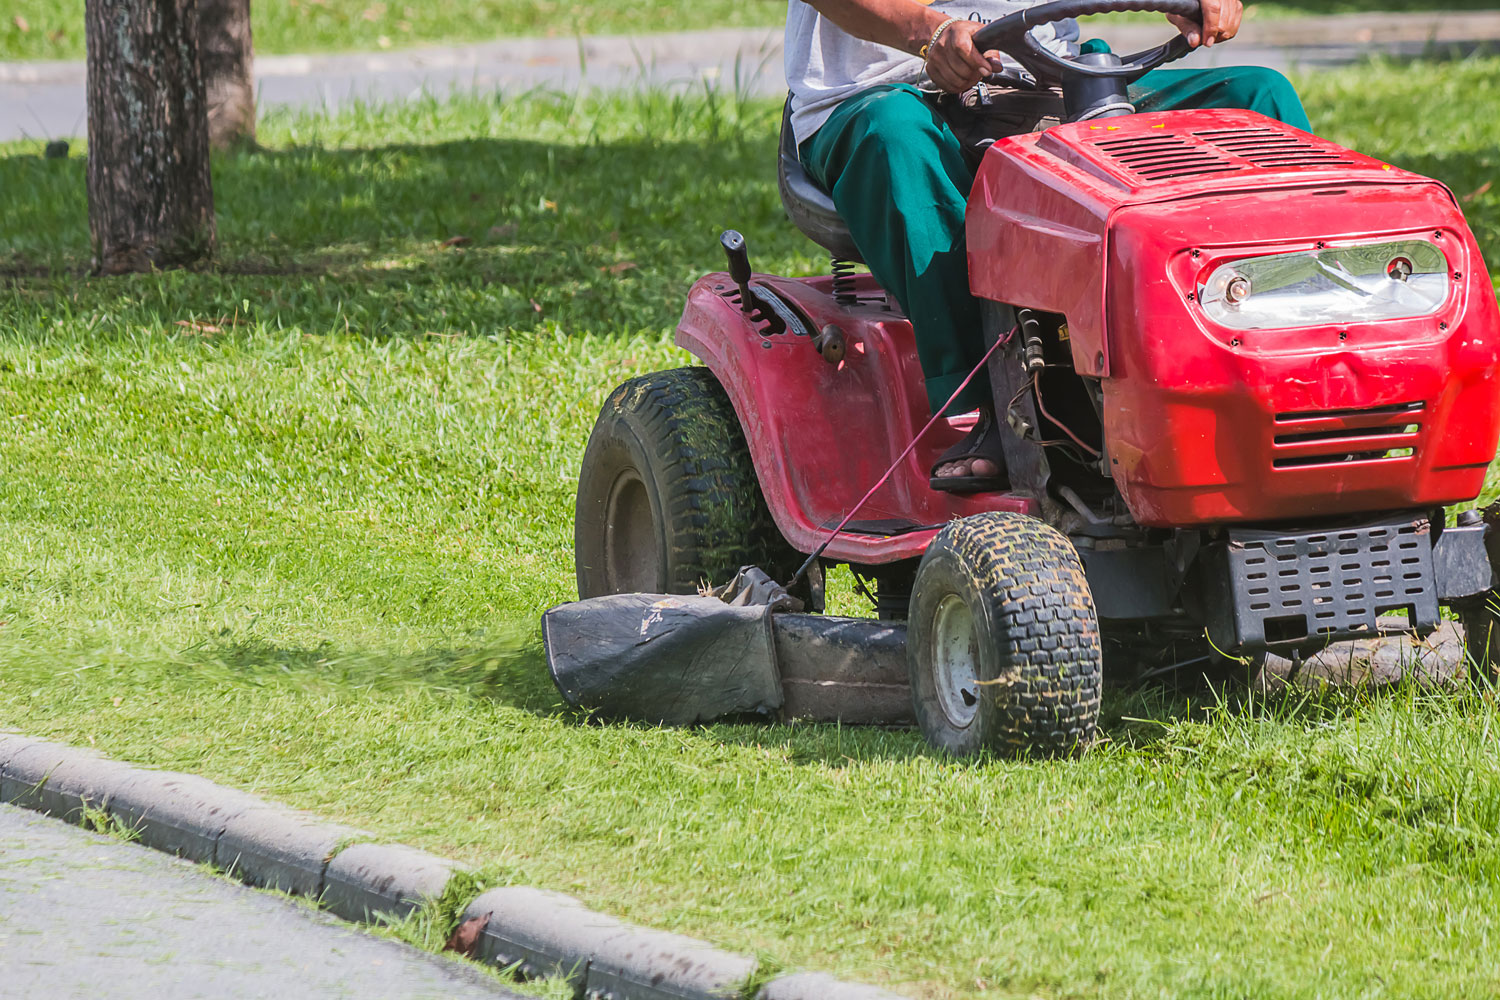 The gardener is using a lawn mower in public park 